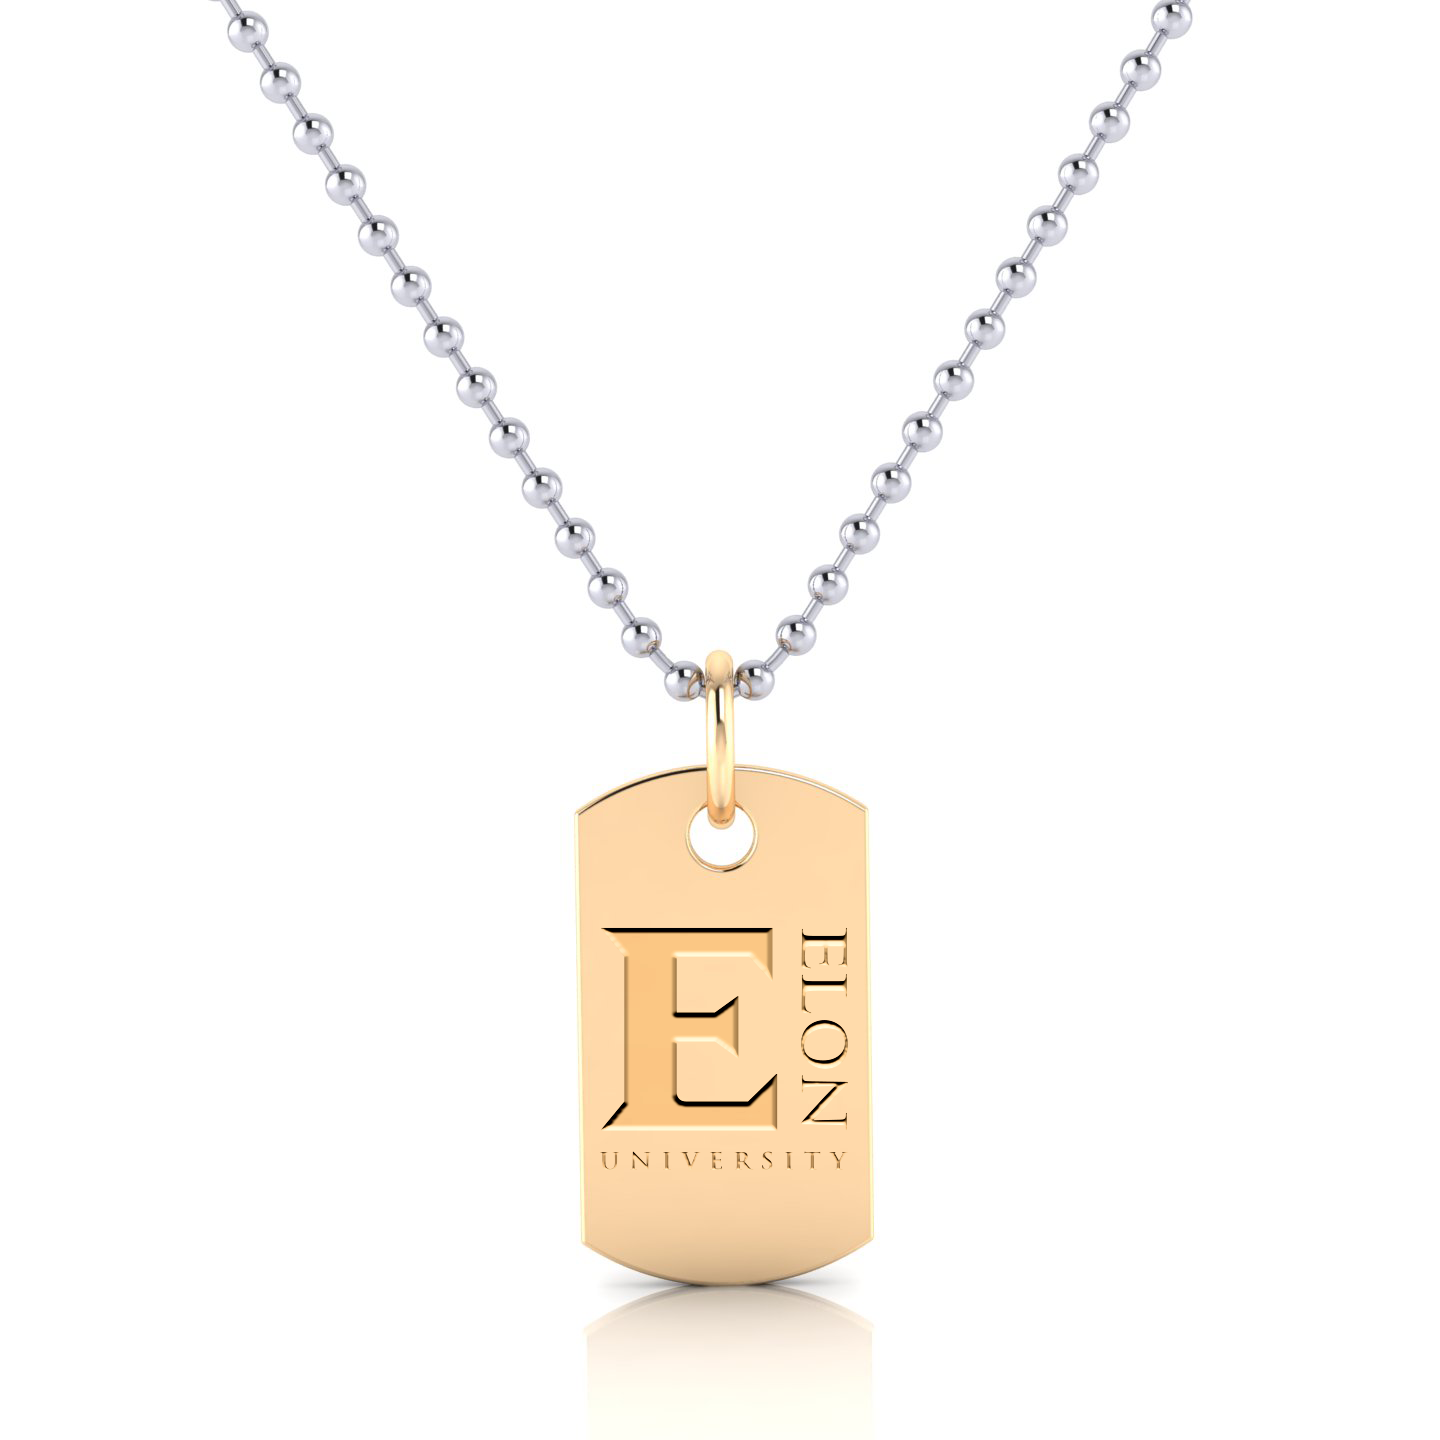 An Elon Squadra E pendant in gold vermeil. The pendant is a simple, elegant design with the Elon University "E" logo. The gold vermeil is a bright, yellow color.